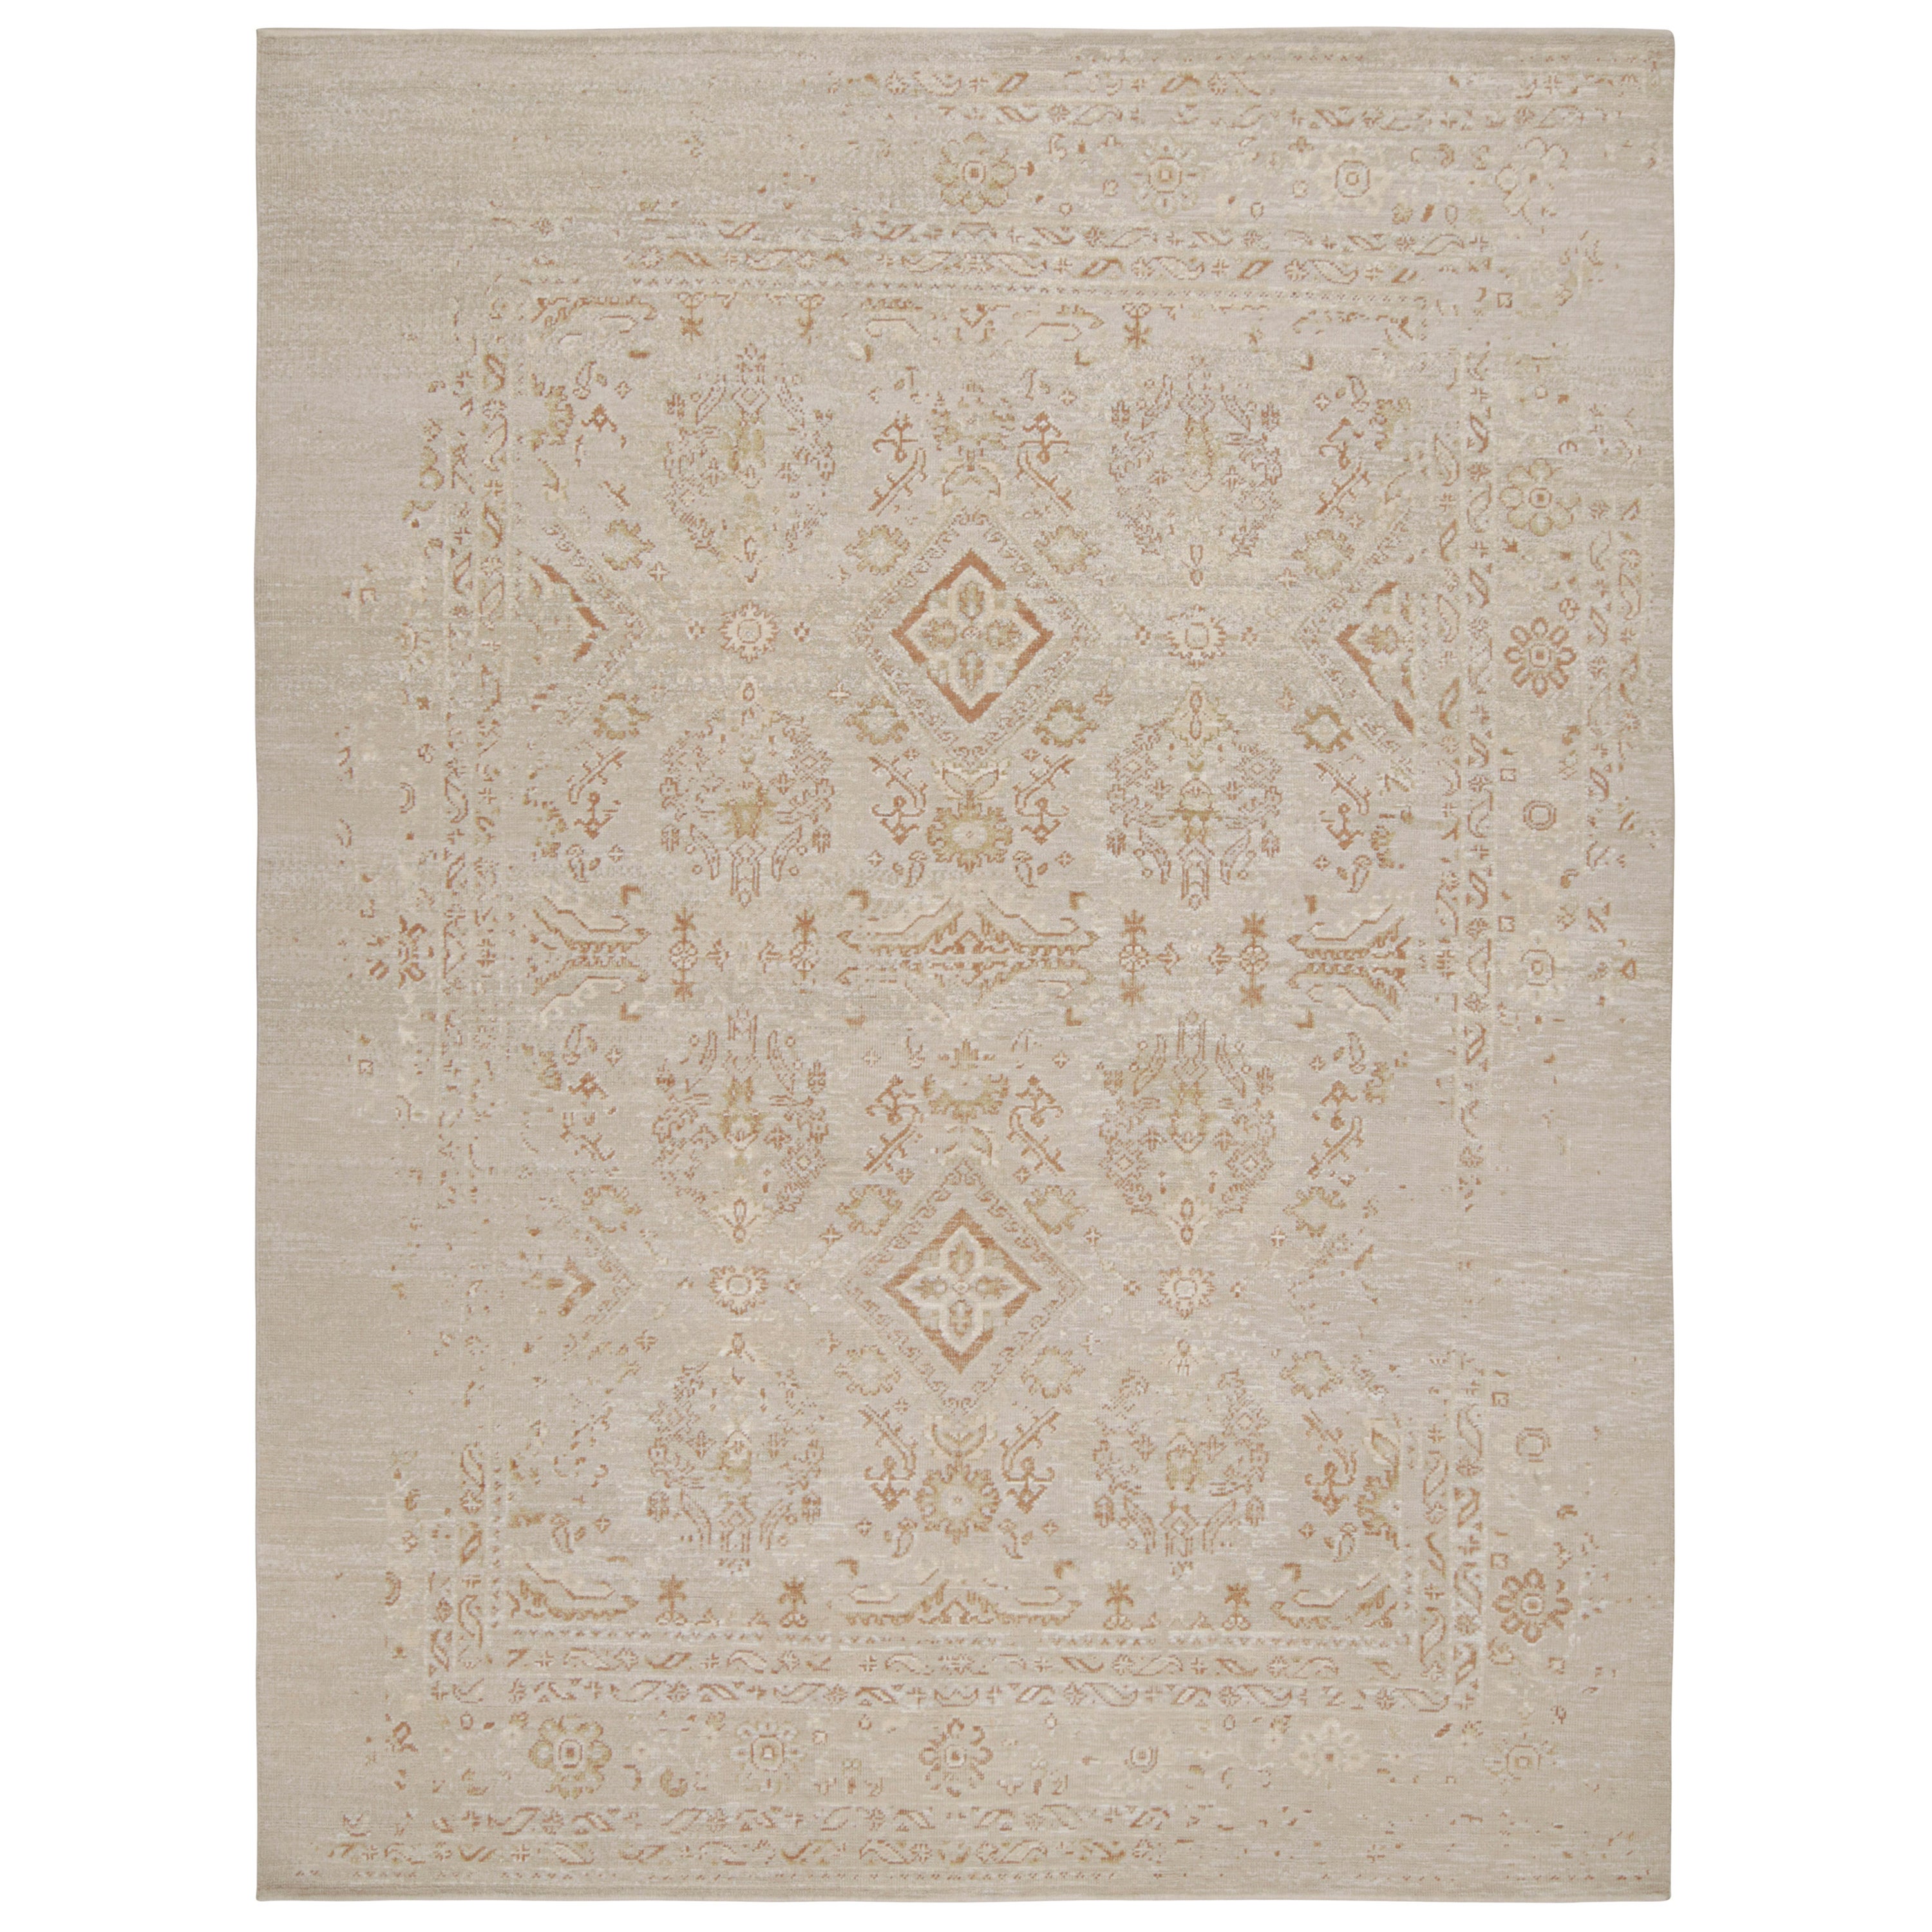 Rug & Kilim’s Oushak style rug in Greige & Brown Floral Patterns